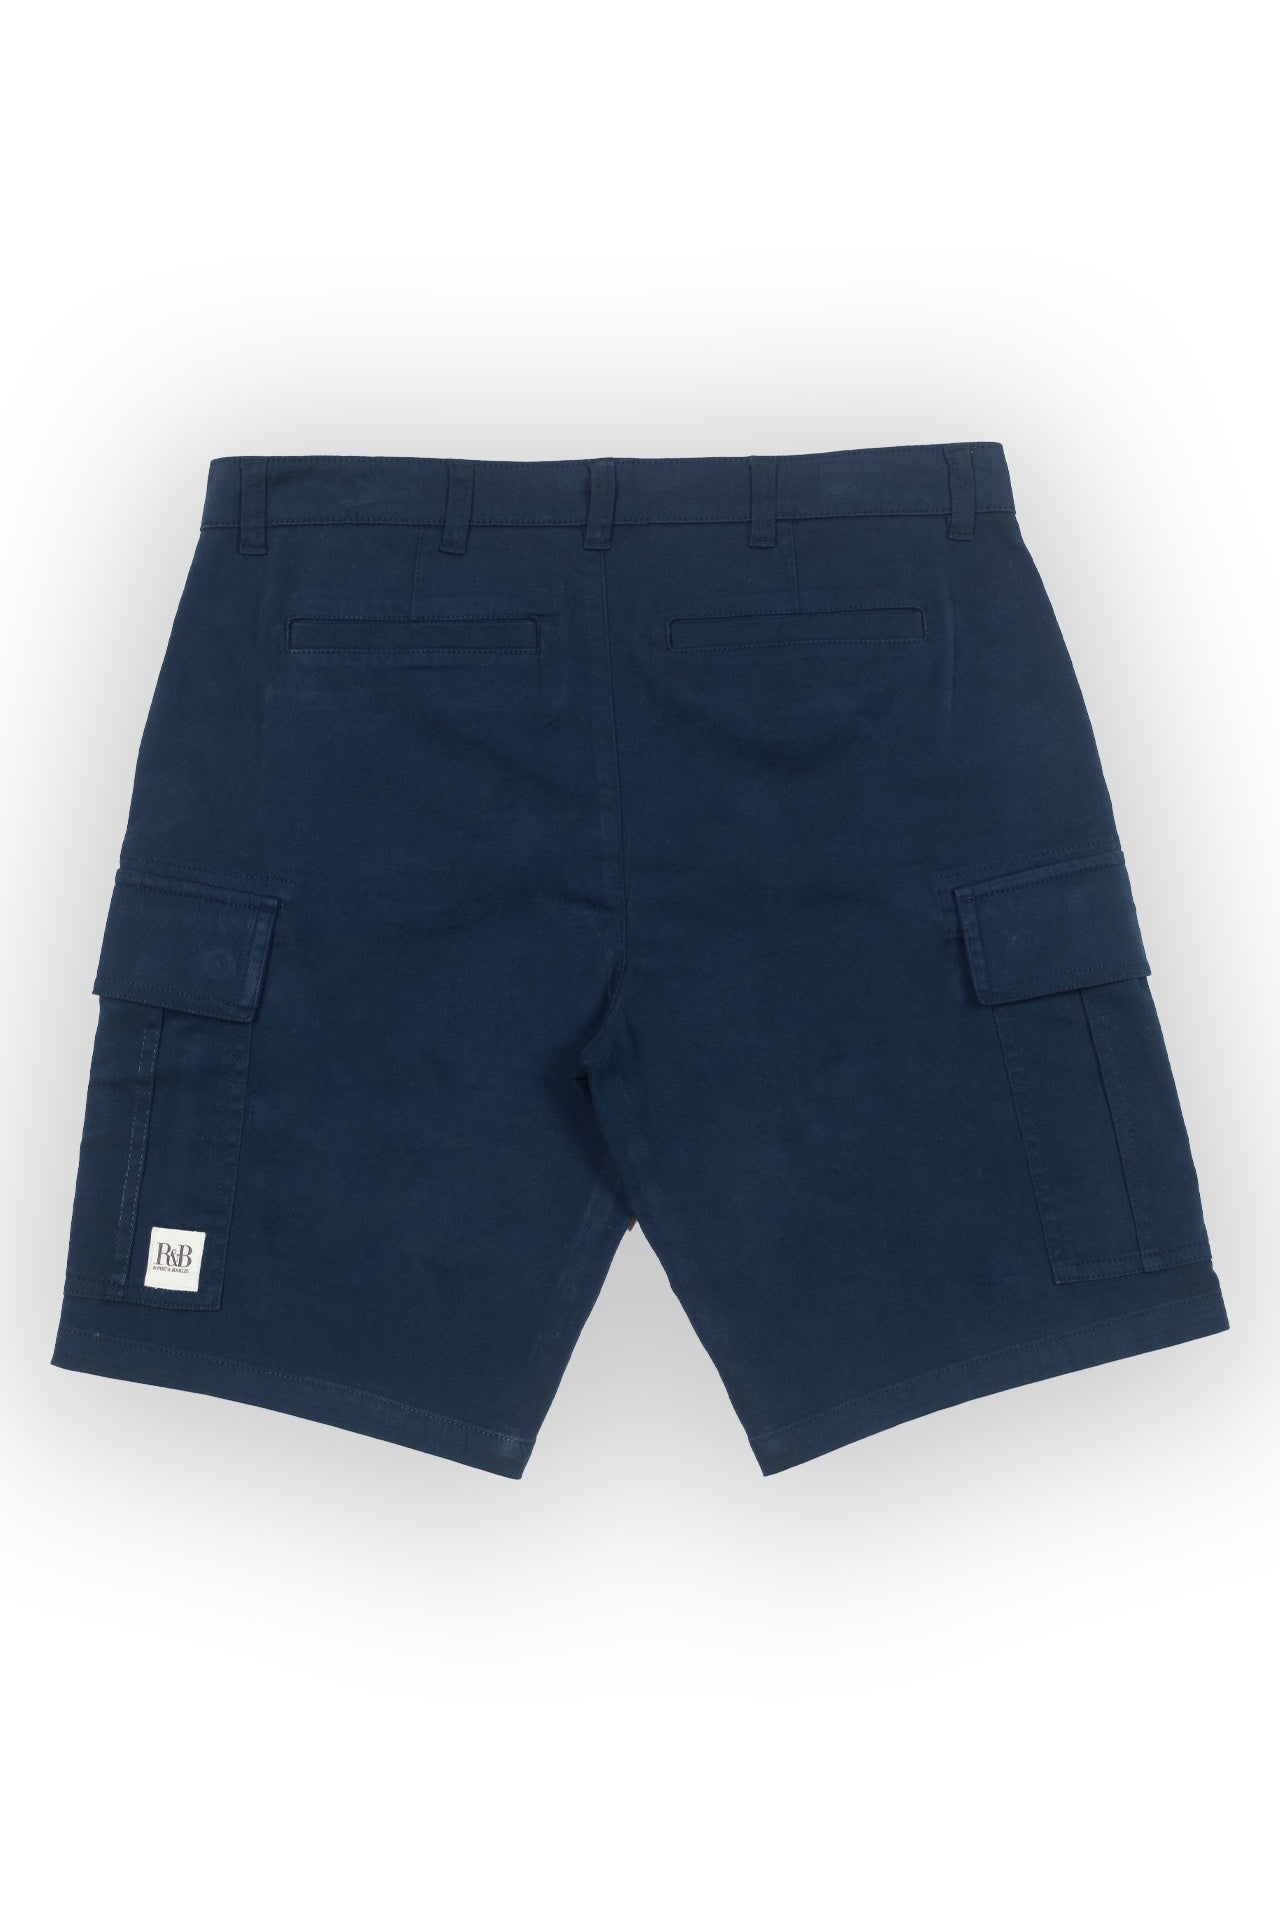 Parker Navy Cargo Shorts - Rupert and Buckley - Shorts